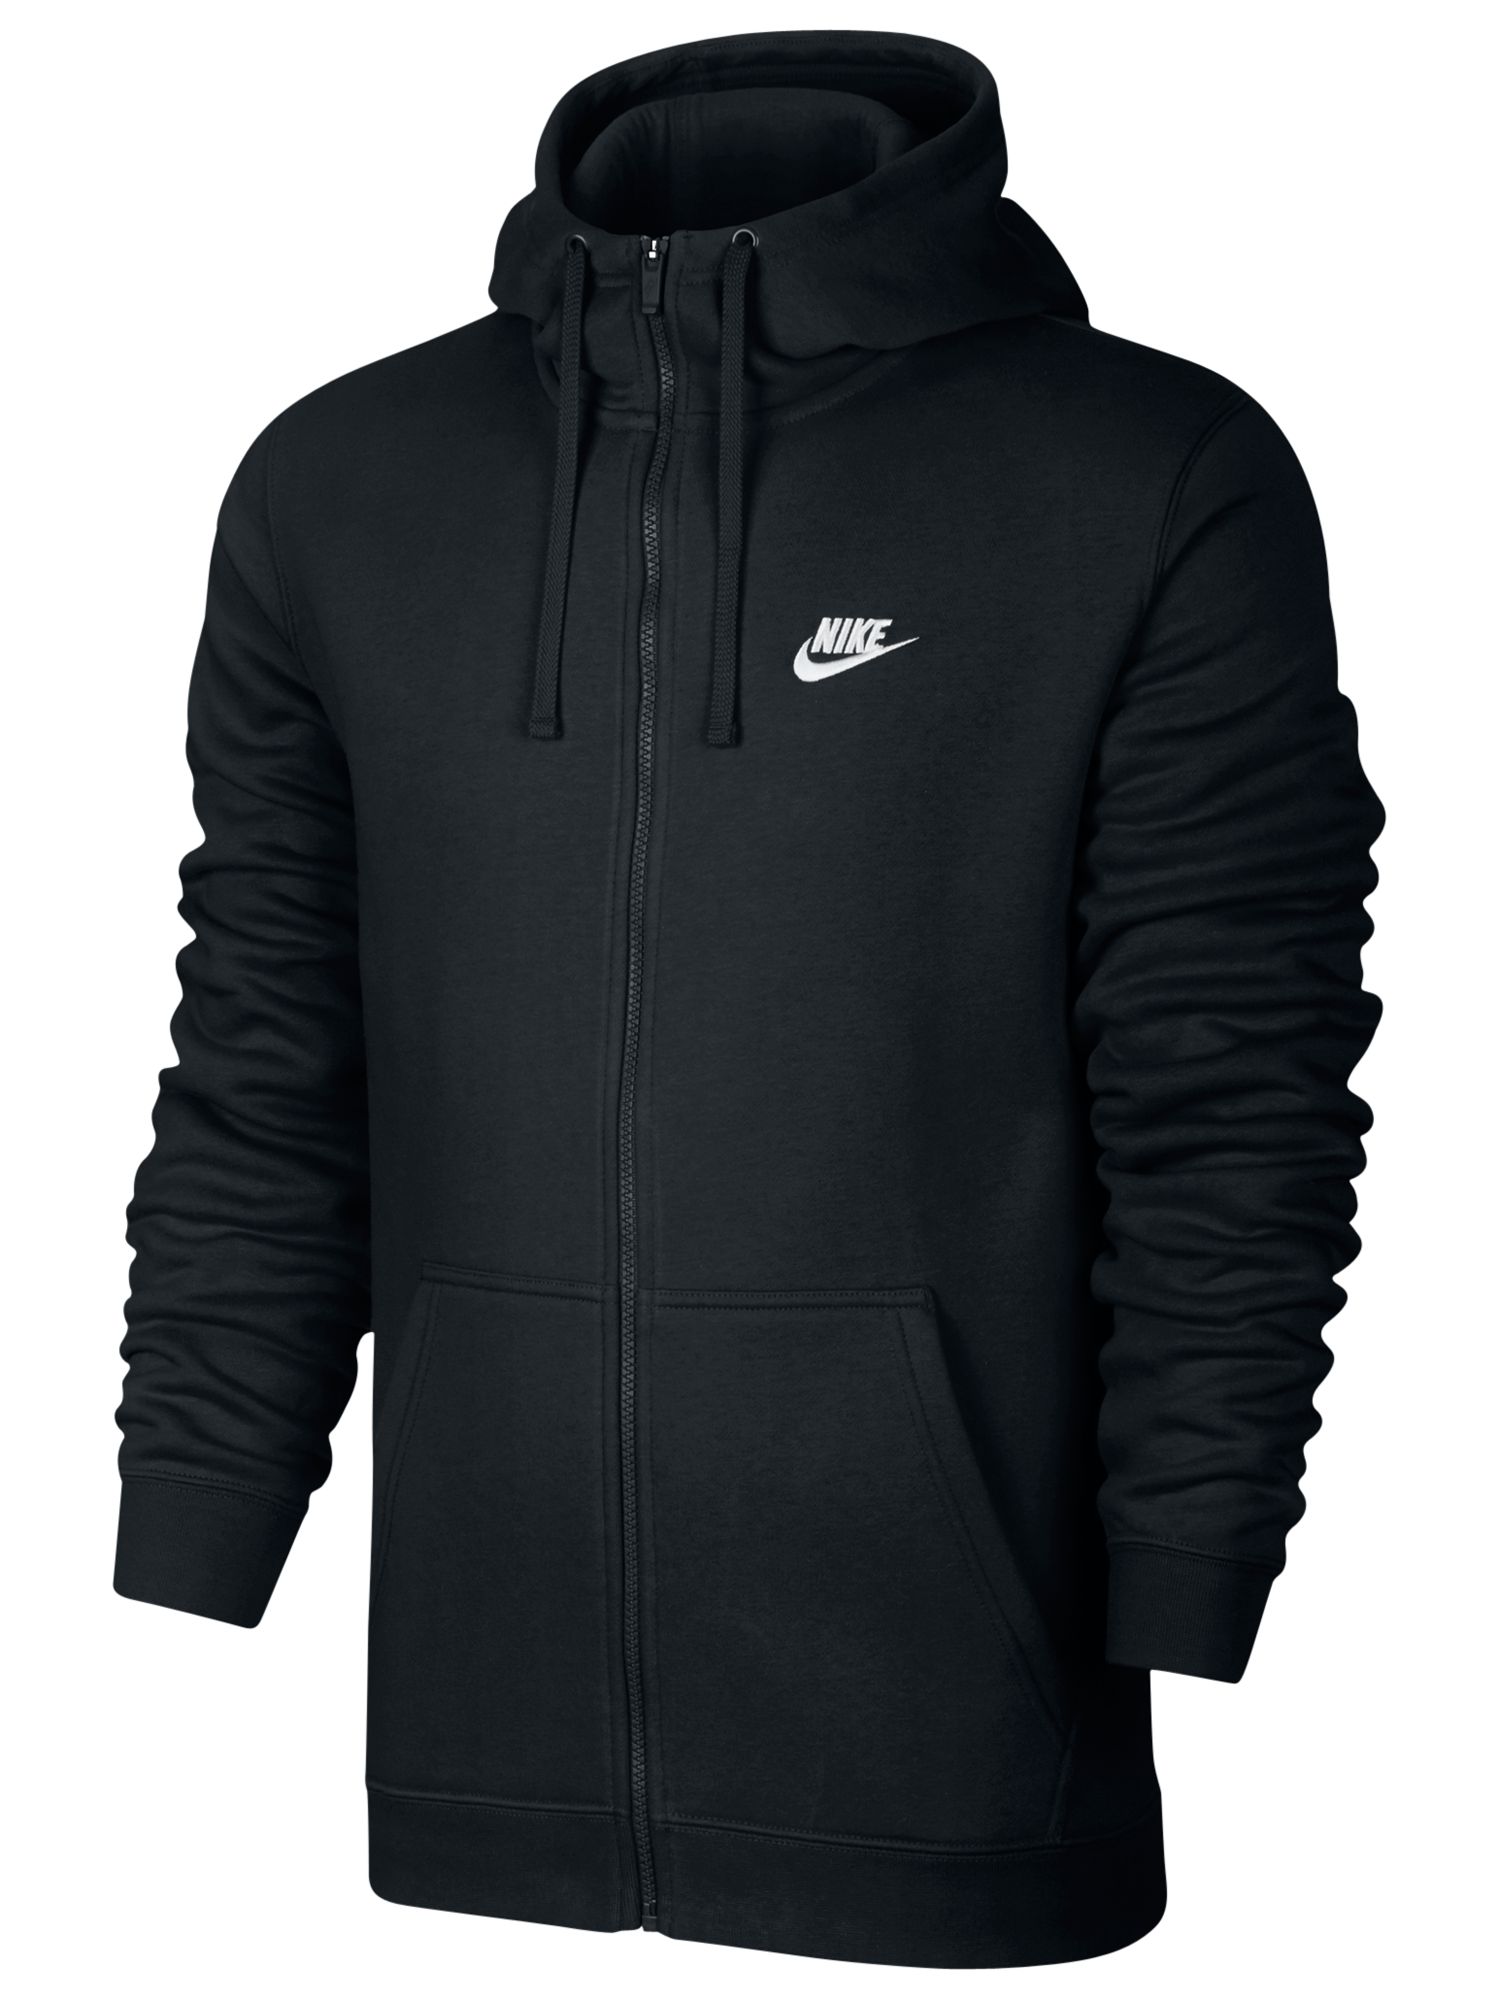 Nike Sportswear Hoodie, Black/White, S